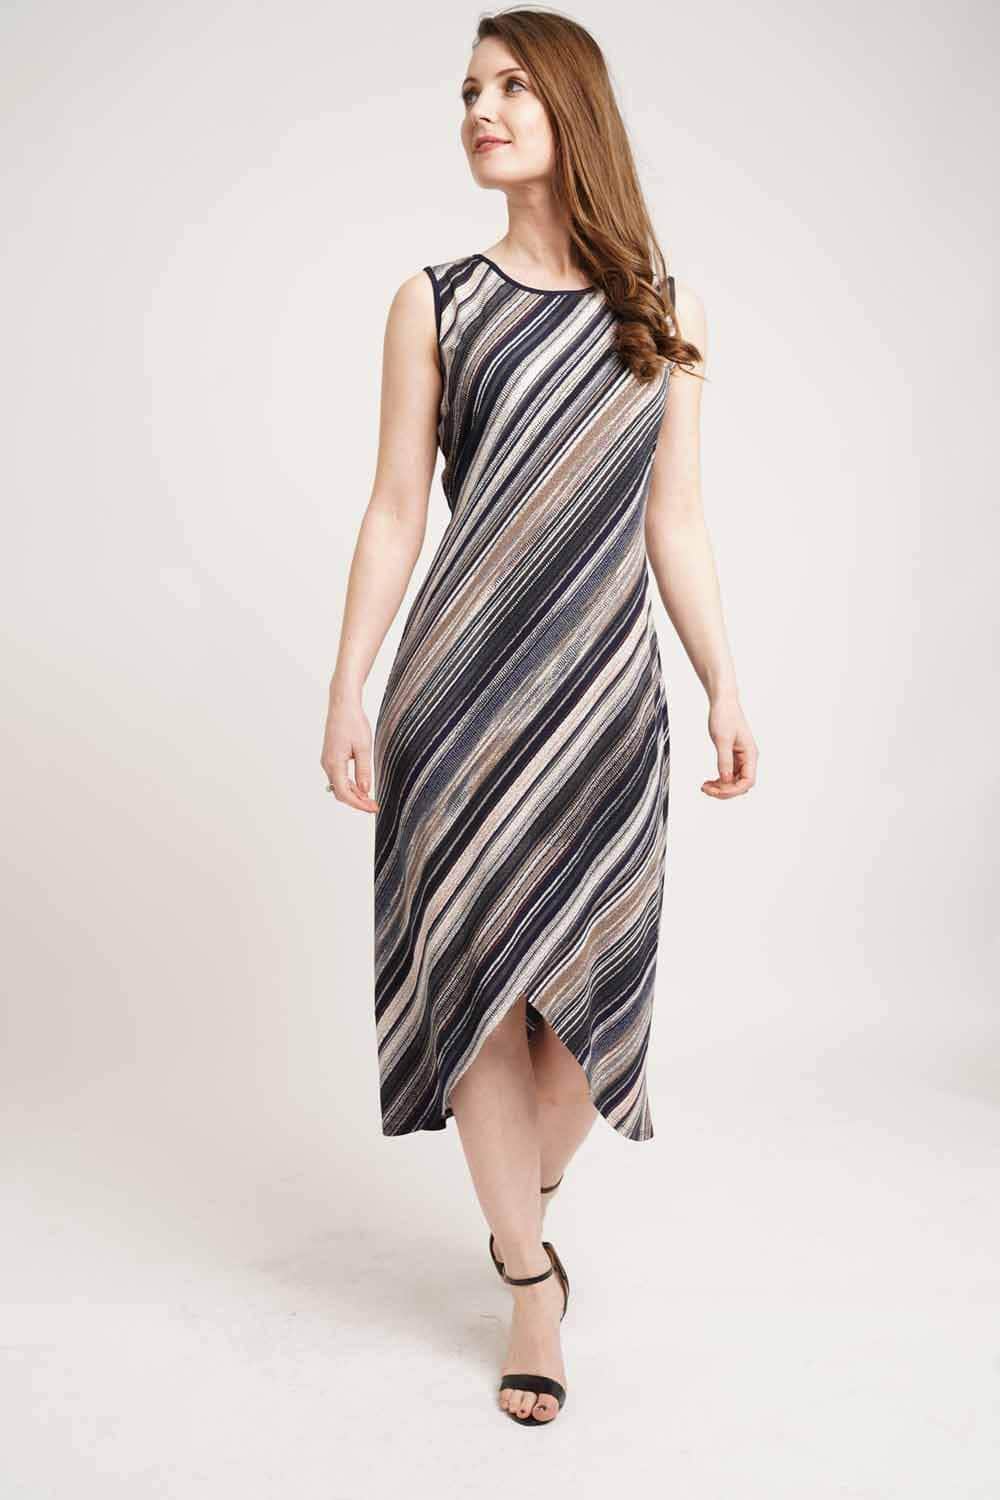 Saloos Dress 12 Striped Sleeveless Midi-Dress